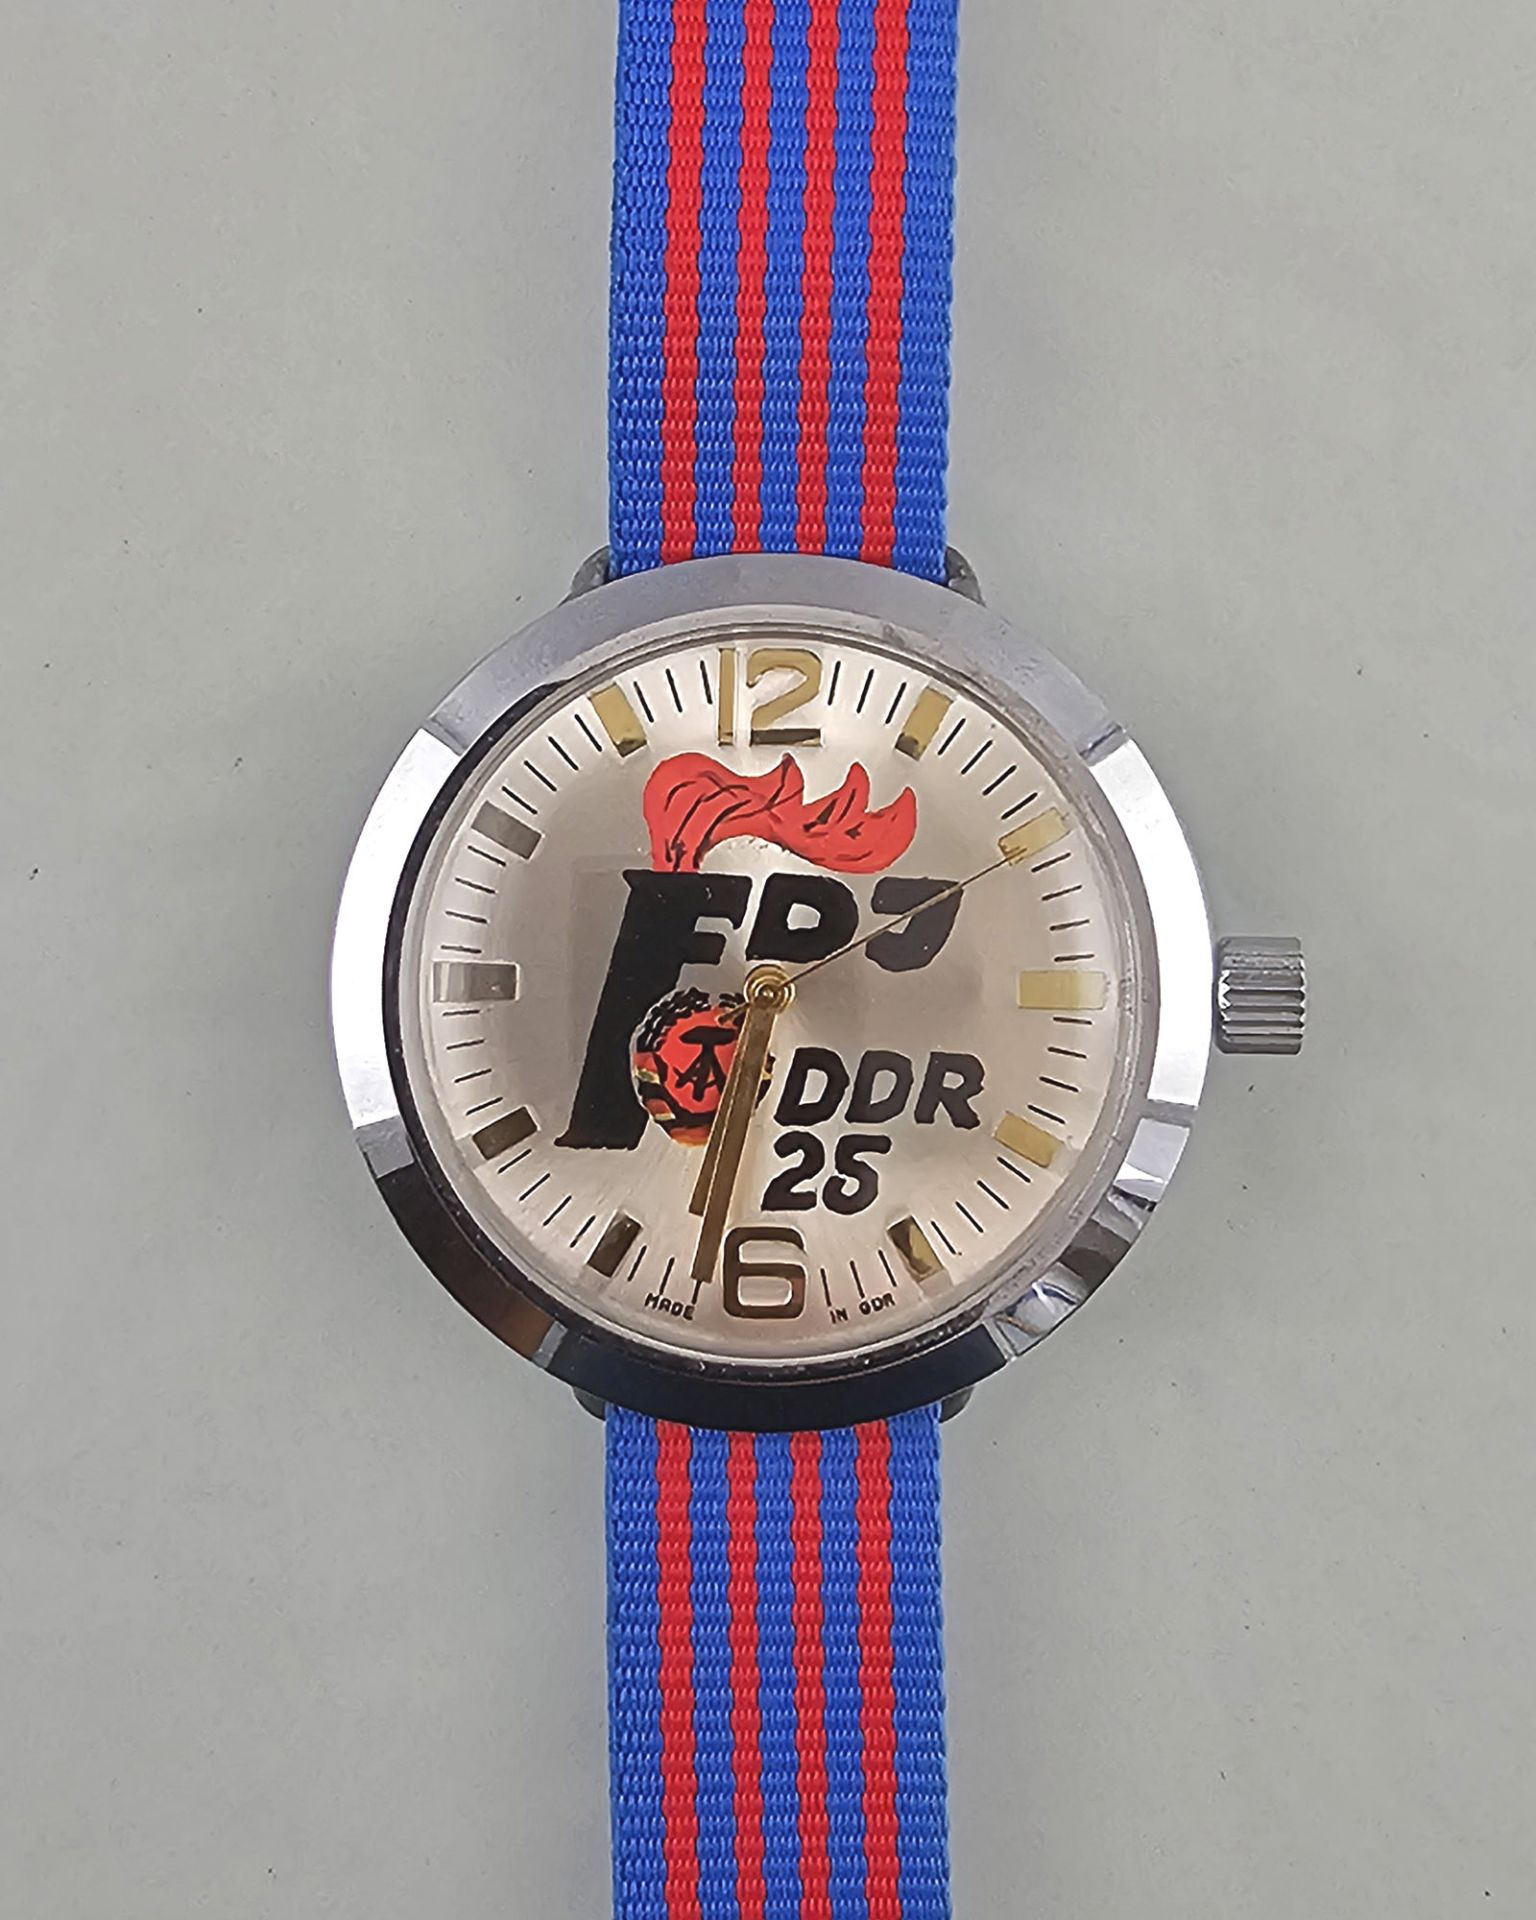 Herren-Armbanduhr Sonderedition 25 Jahre DDR FDJ - Image 3 of 4